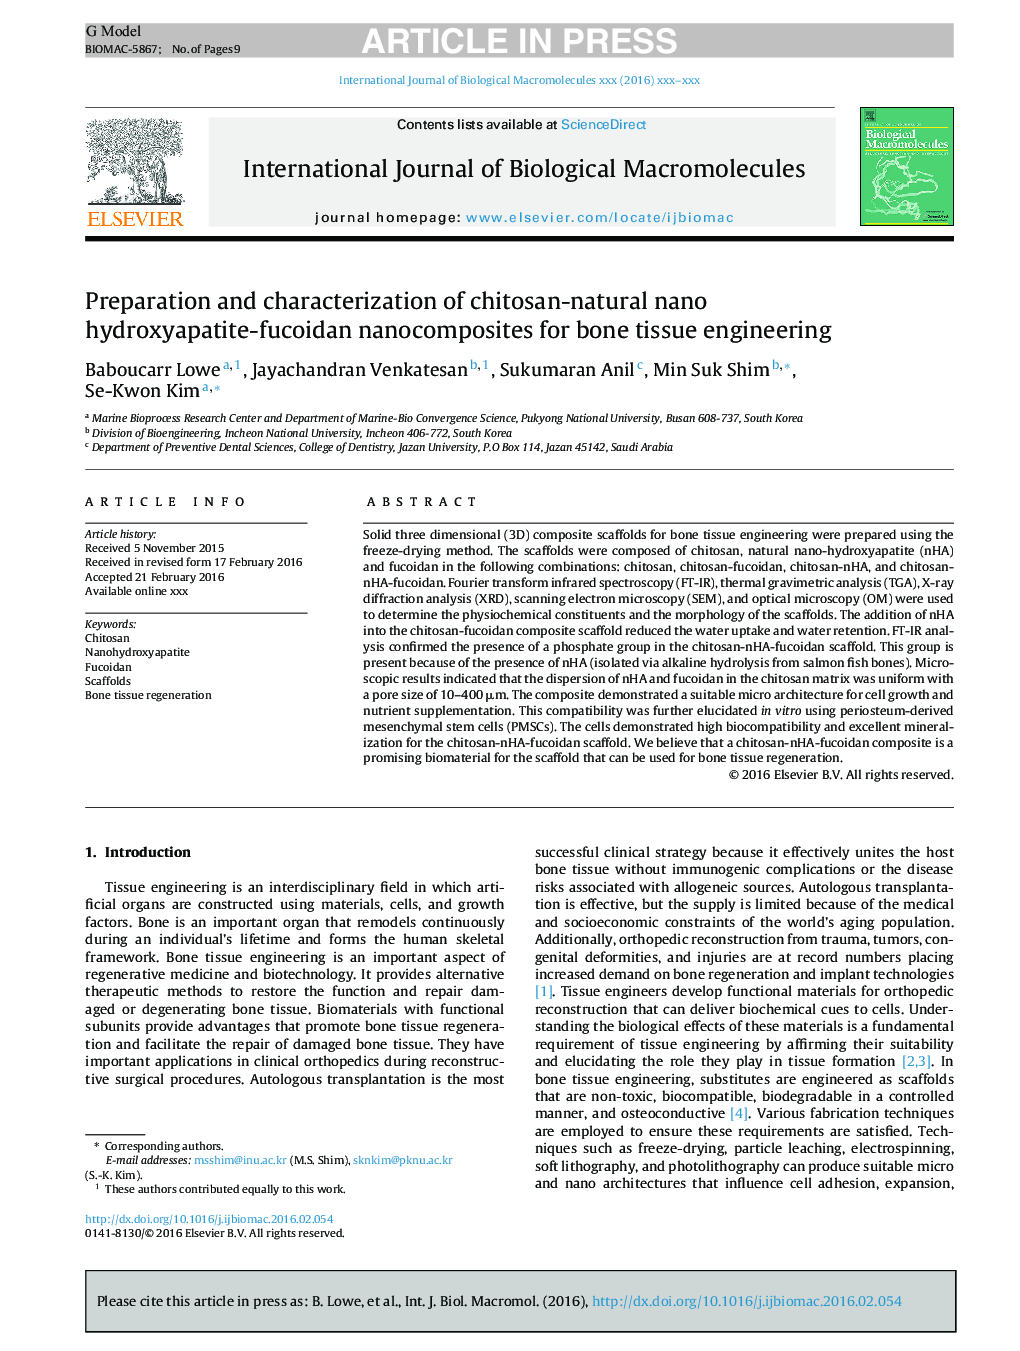 Preparation and characterization of chitosan-natural nano hydroxyapatite-fucoidan nanocomposites for bone tissue engineering